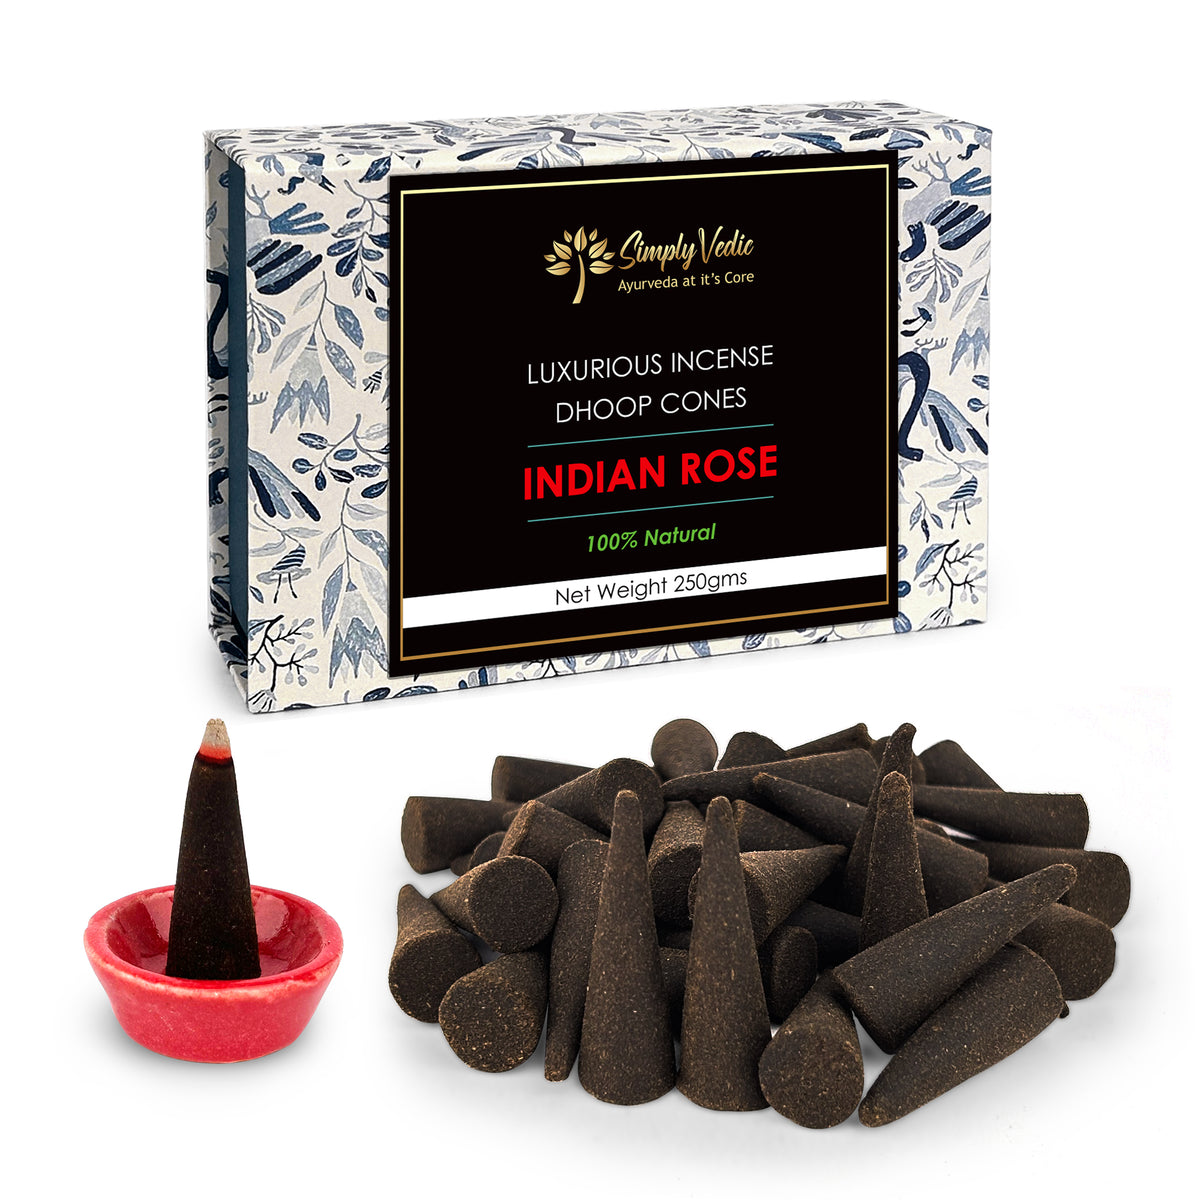 Simply Vedic's Indian Rose Incense Cones